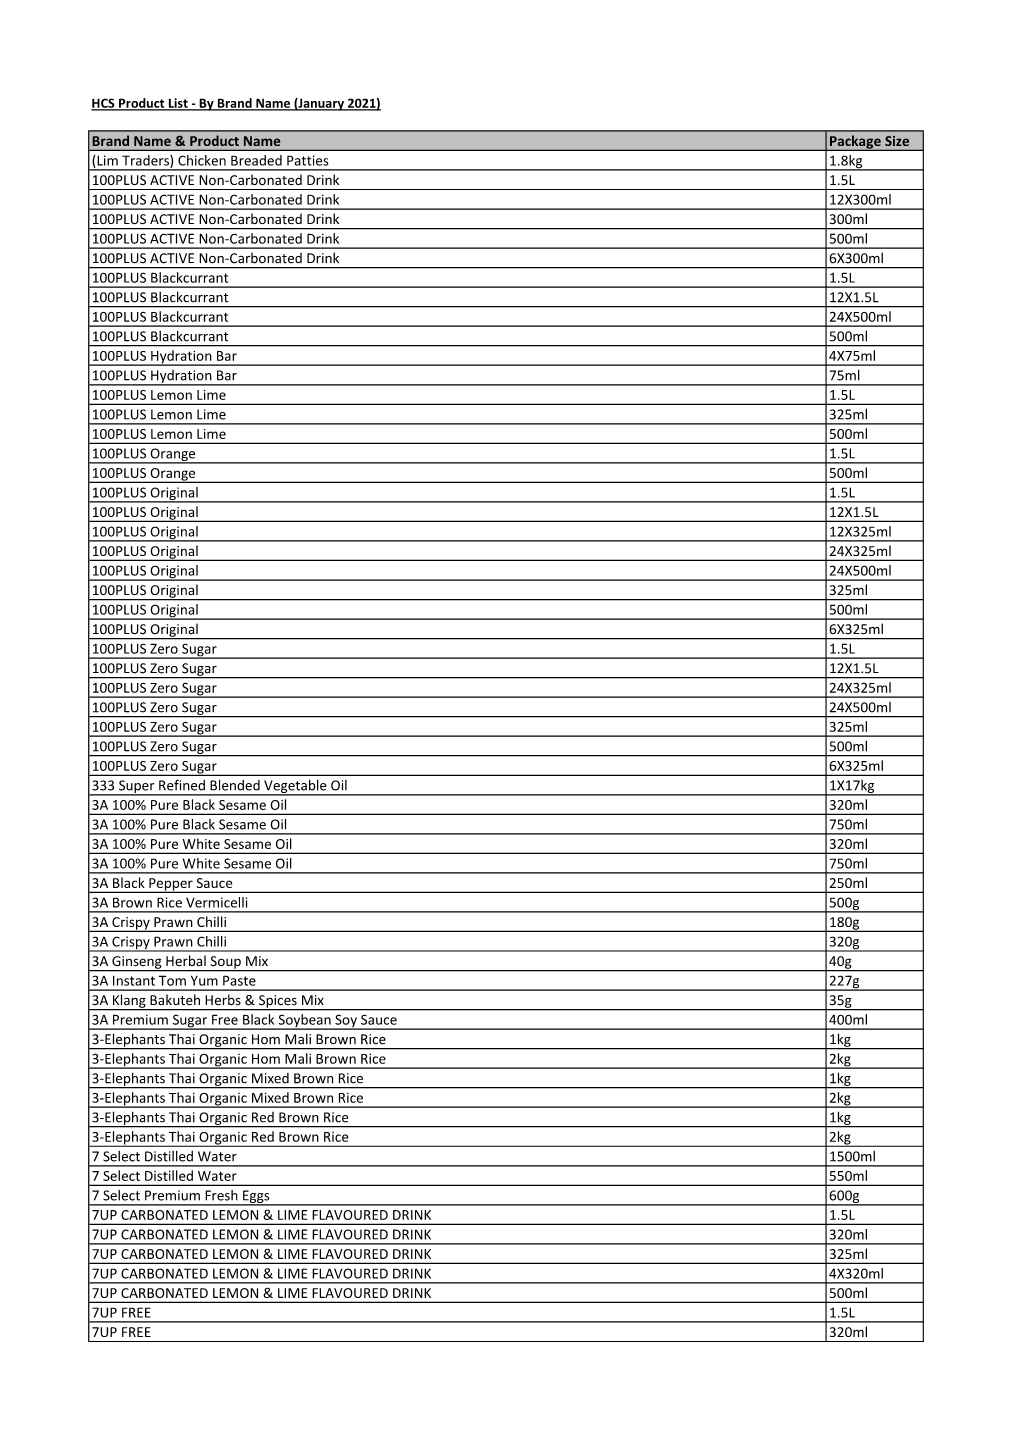 HCS Website List As of 31 Dec 2020.Xlsx